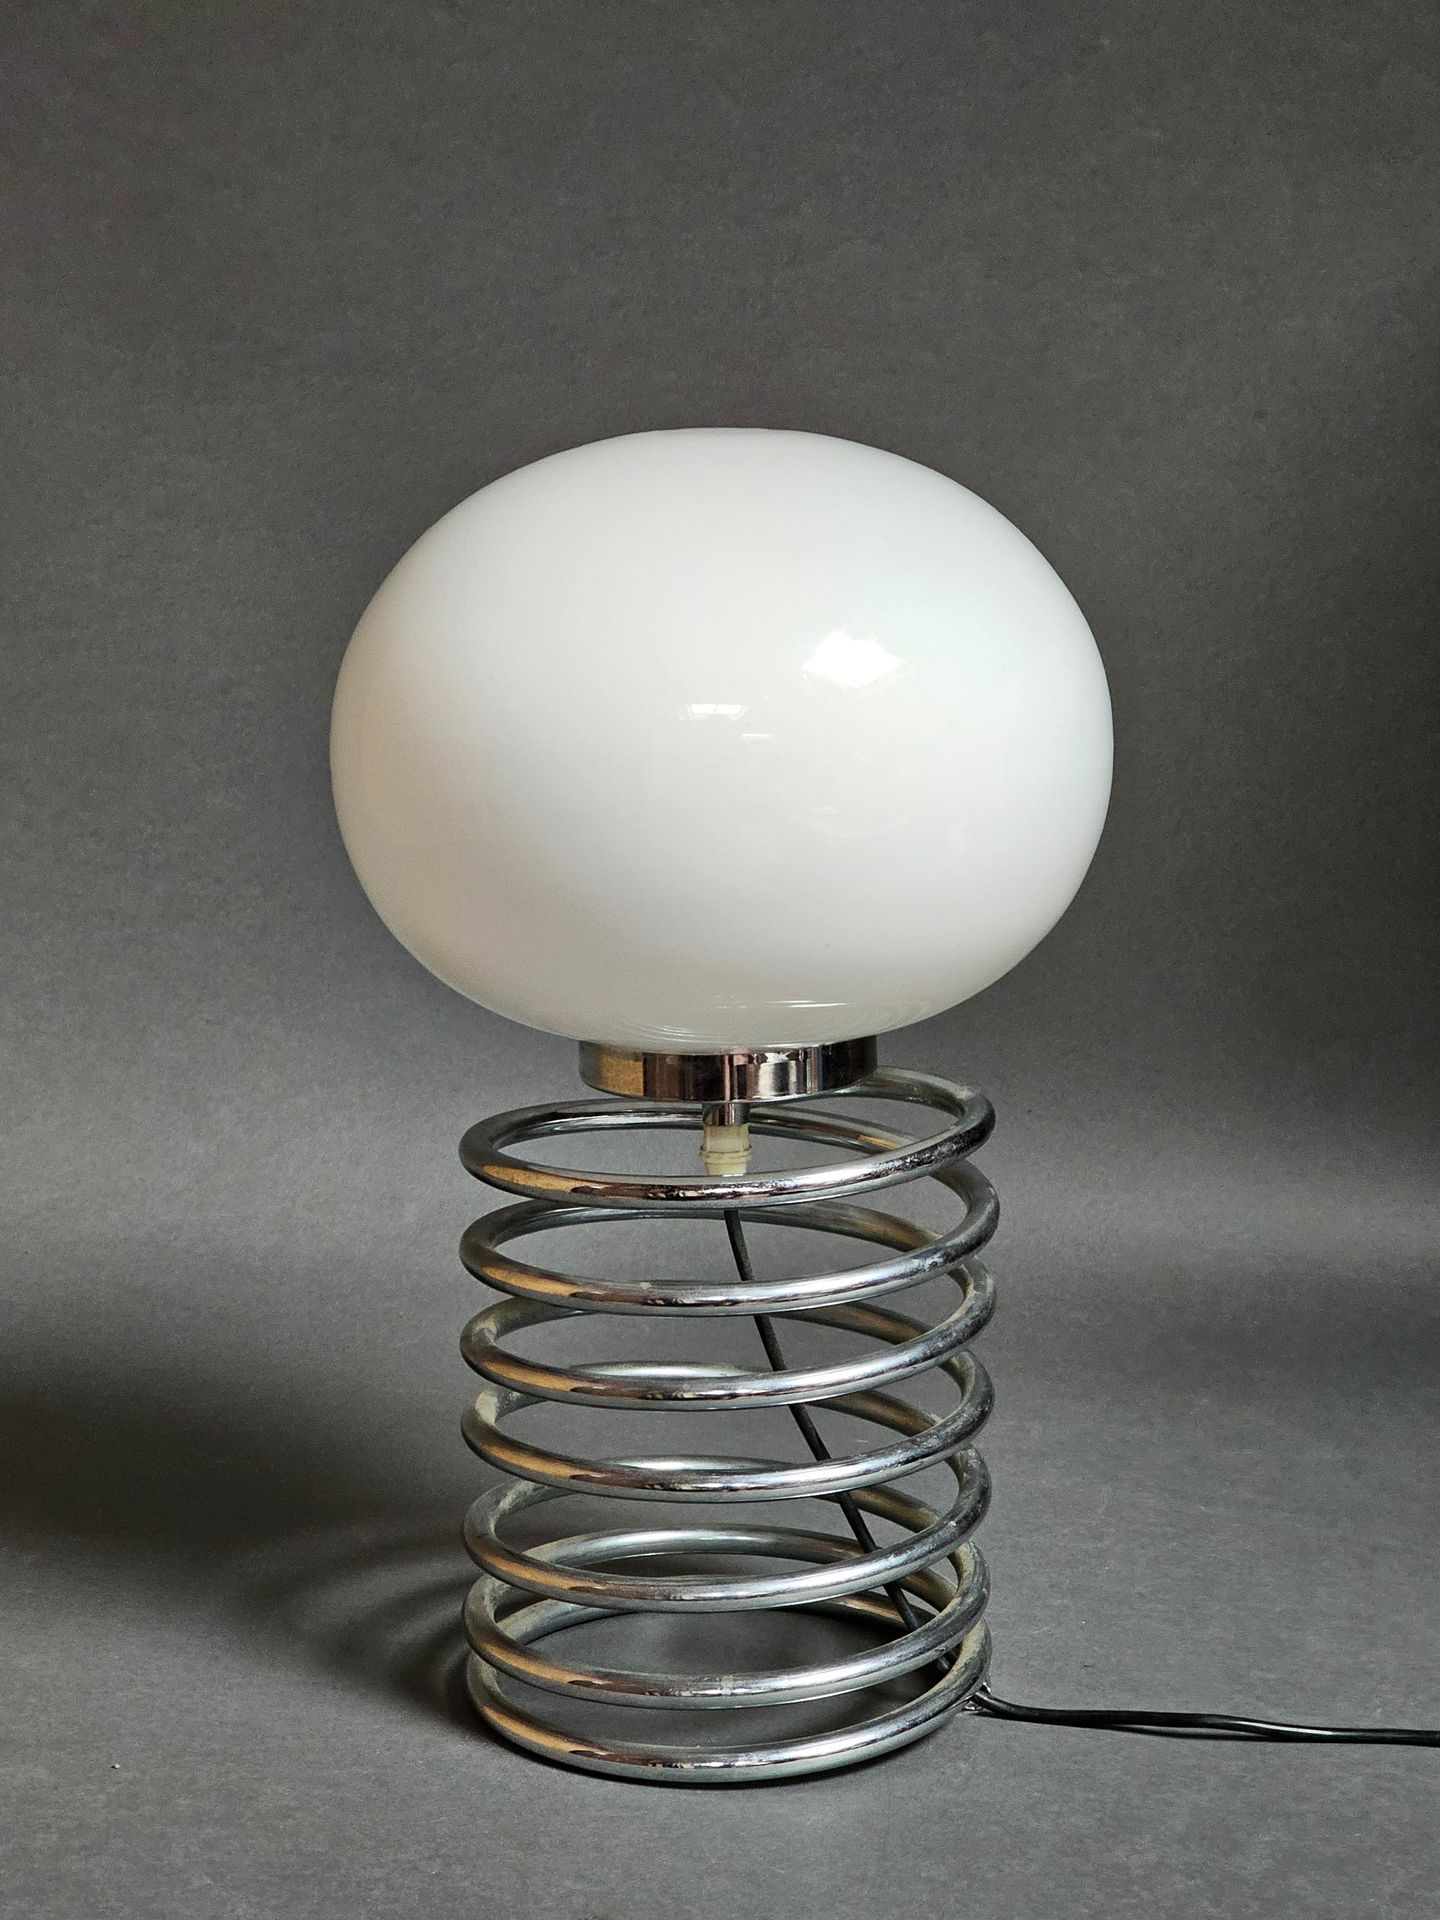 Null 英戈-毛勒（1932-2019）台灯，"春天 "型，镀铬金属和乳白玻璃。高 40 厘米 轻微磨损